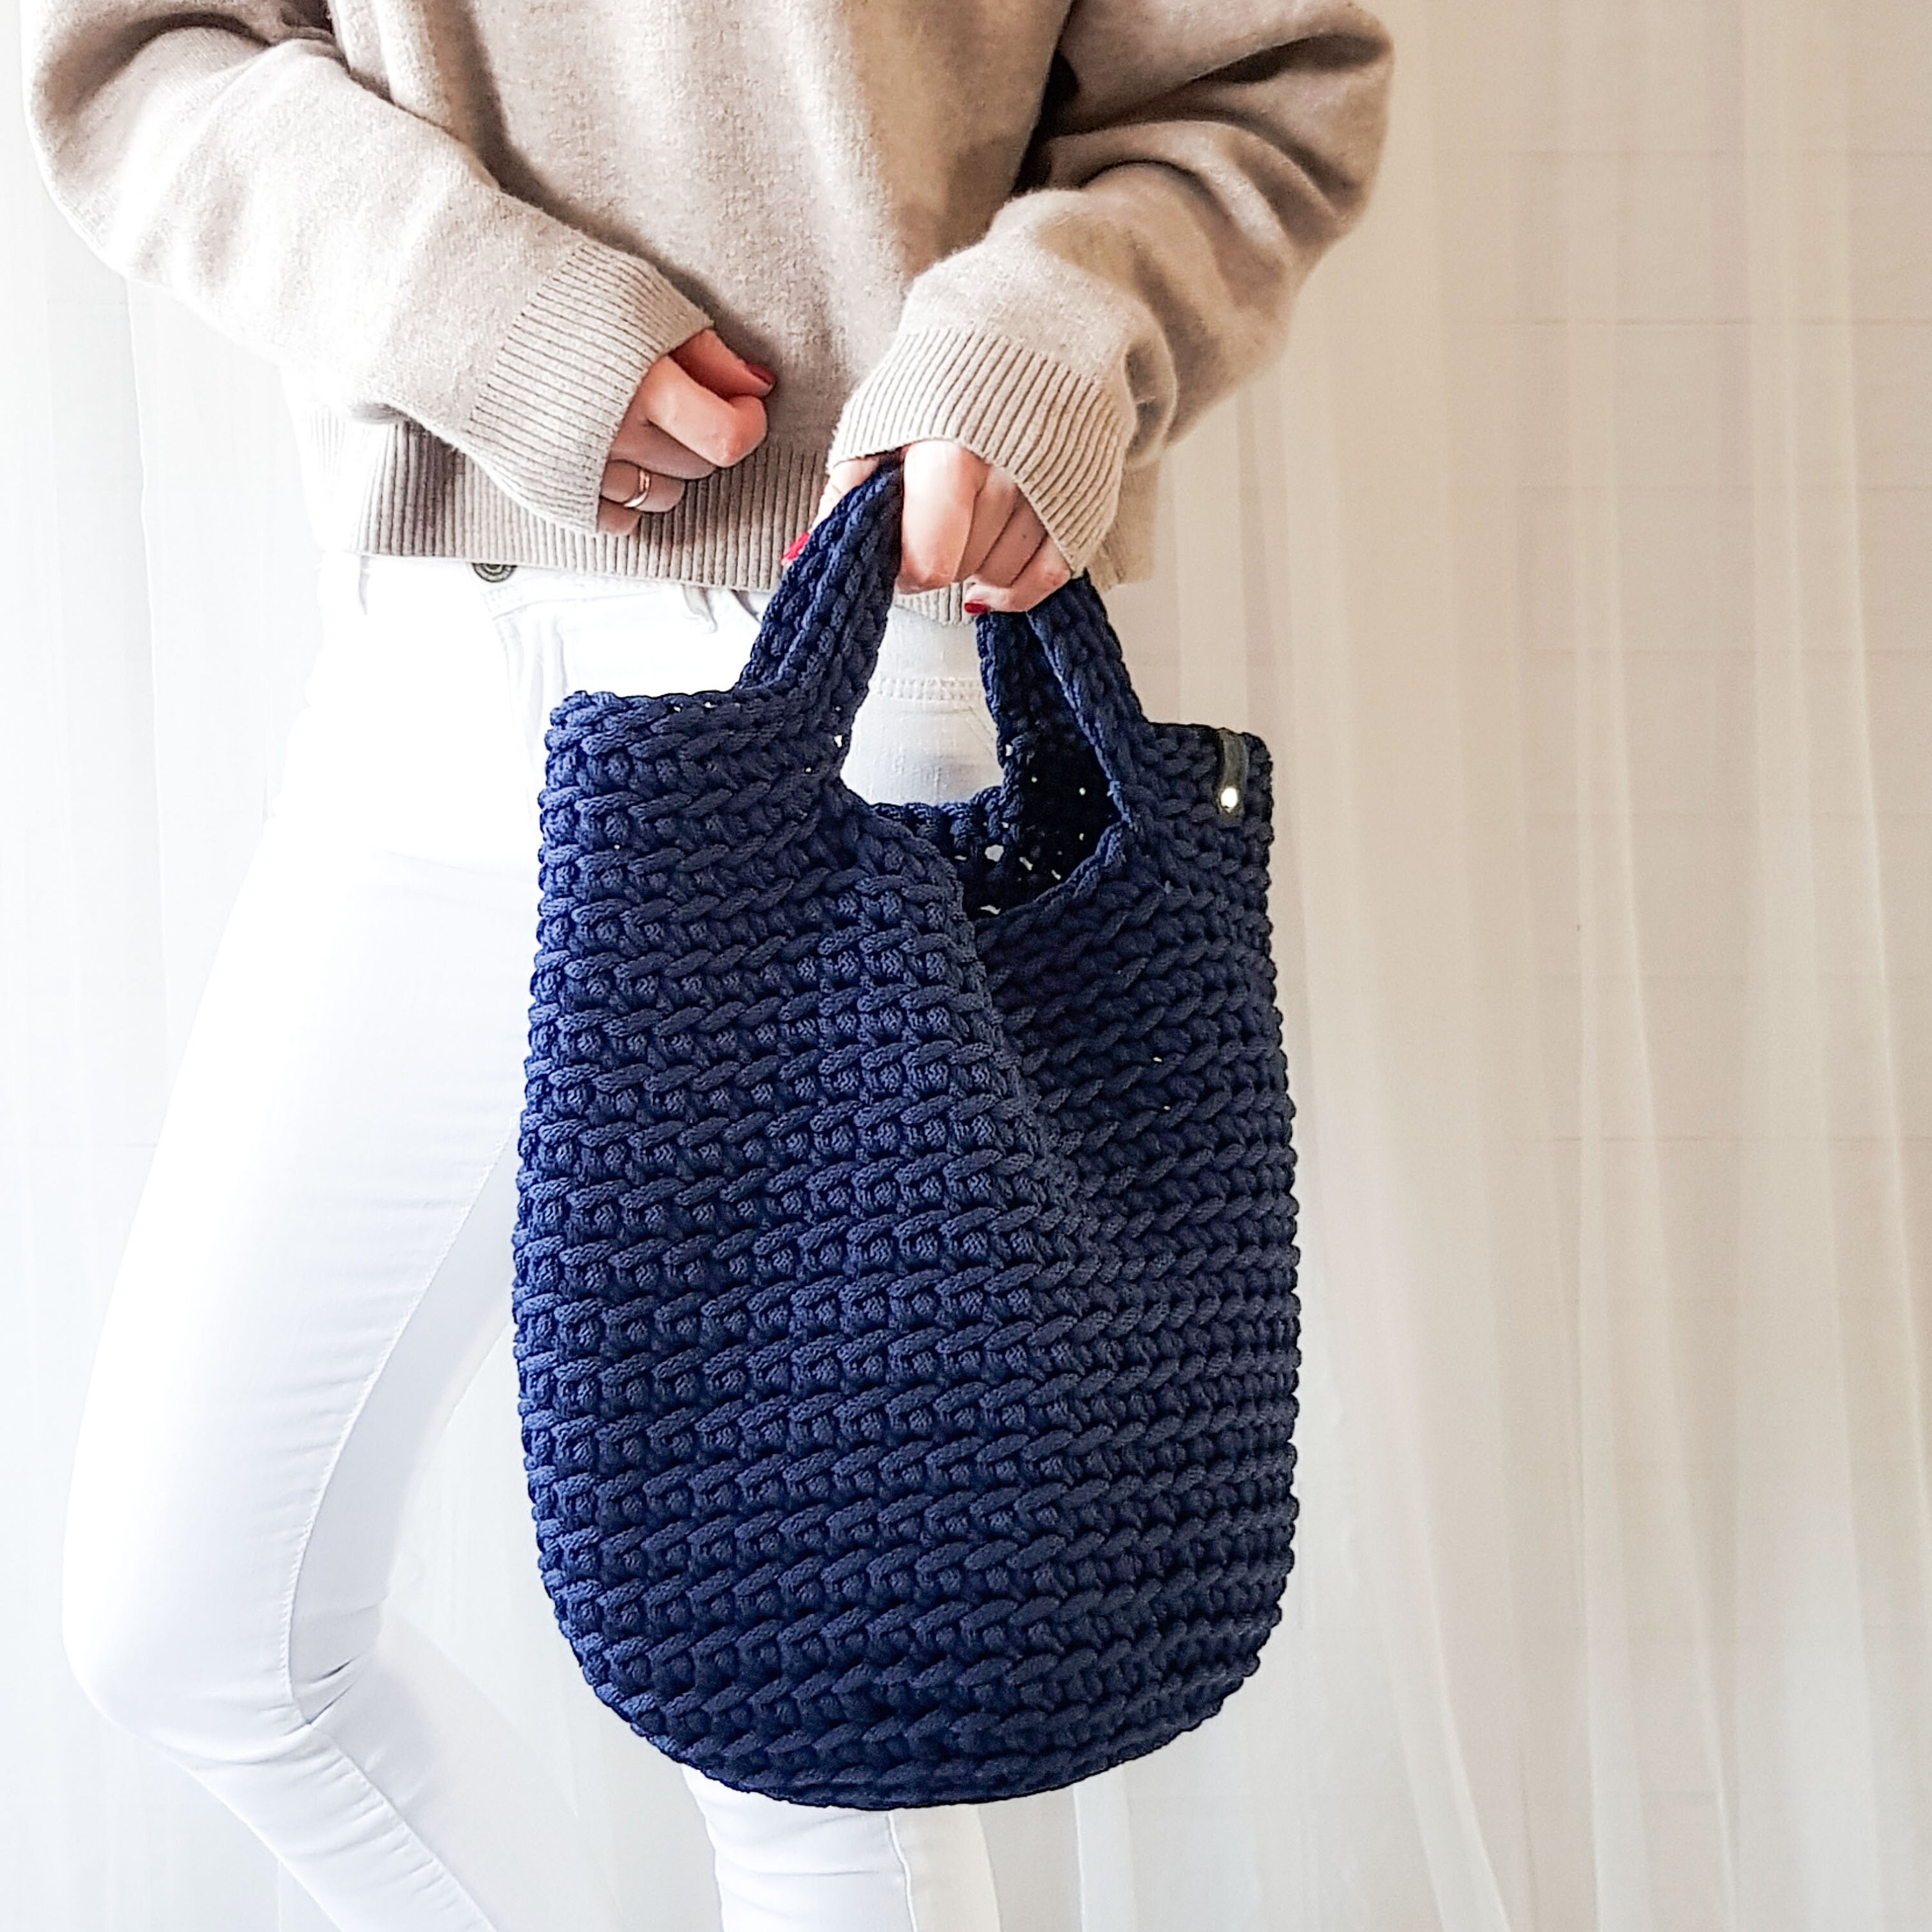 Crochet hand bag/ Everyday tote bag/ Womens bag/ Navy blue | Etsy